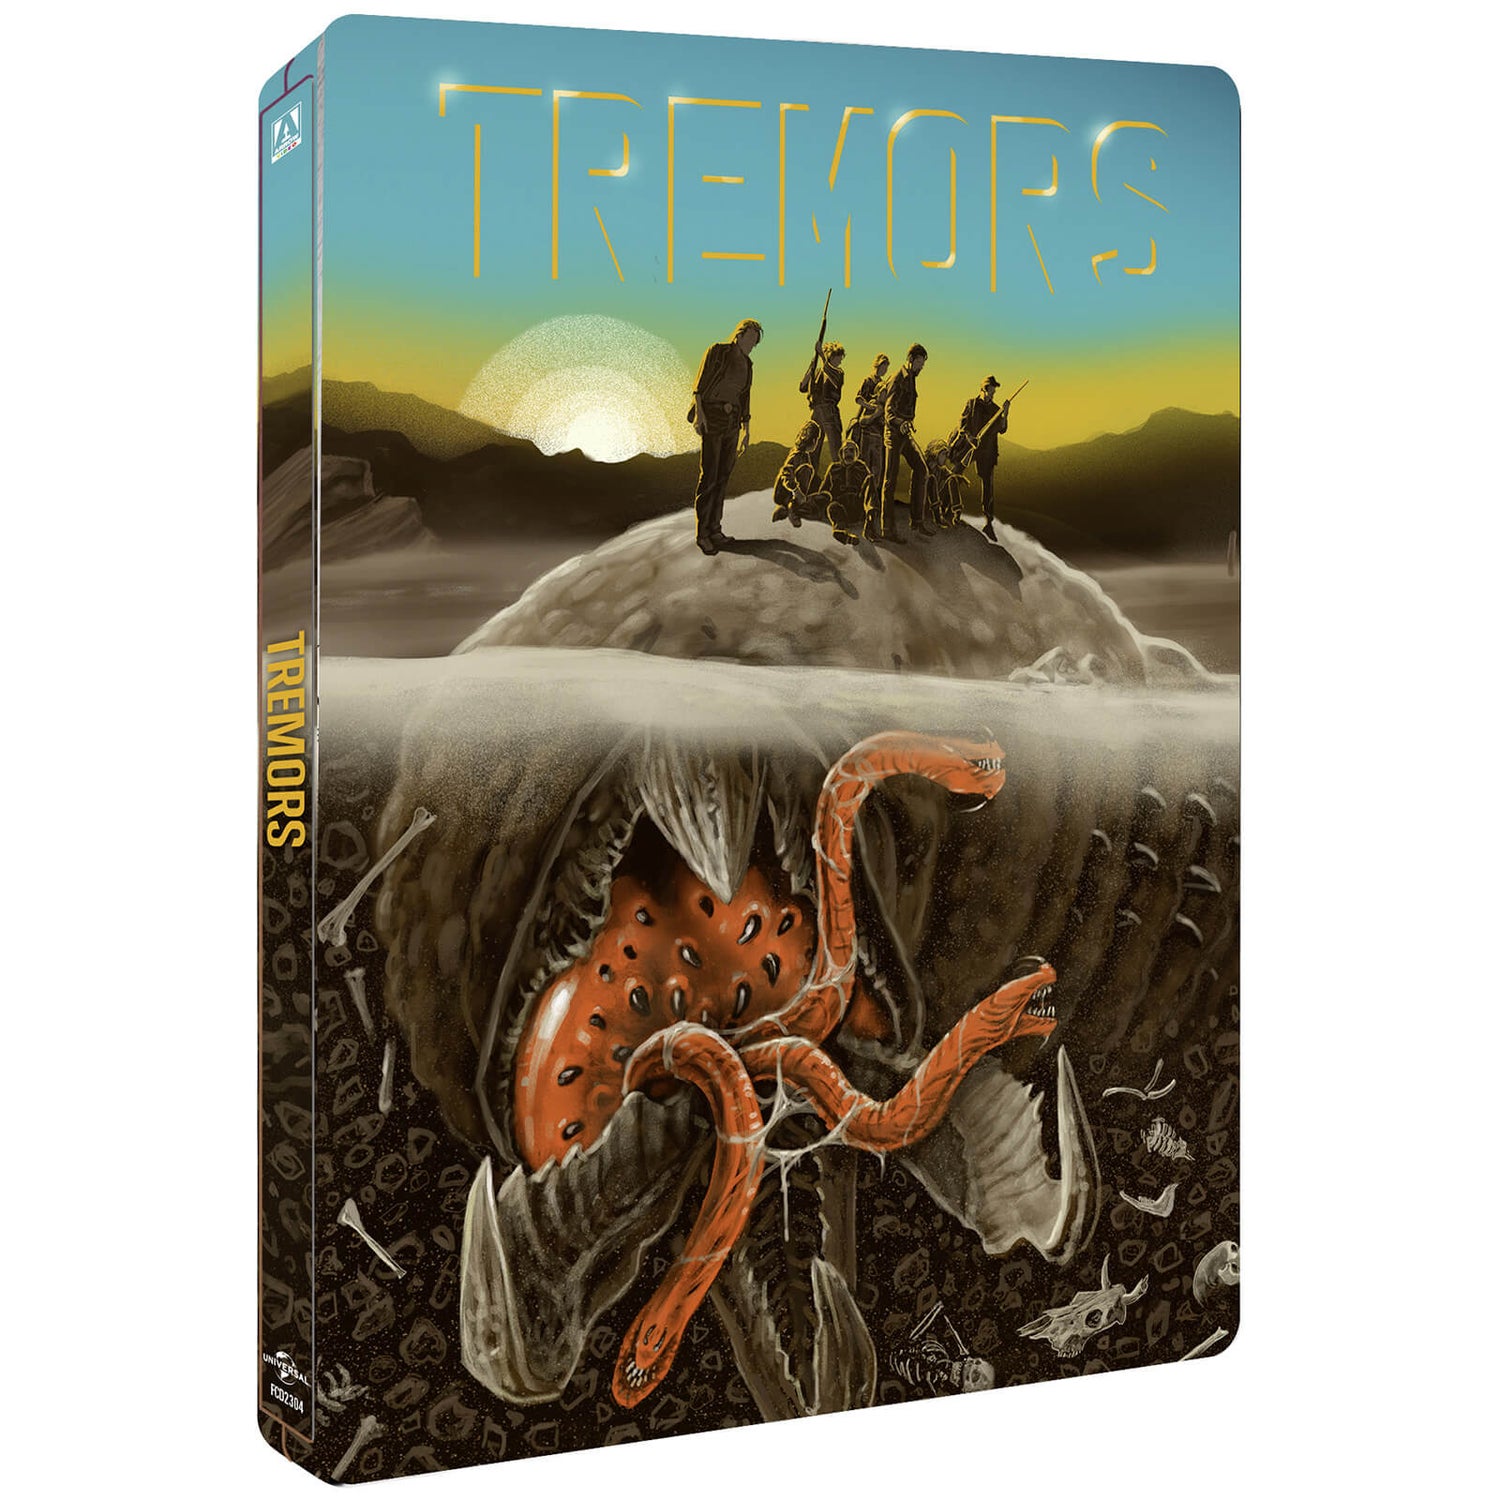 Tremors - 4K Ultra HD Steelbook (Includes Blu-ray) (Zavvi Exclusive)